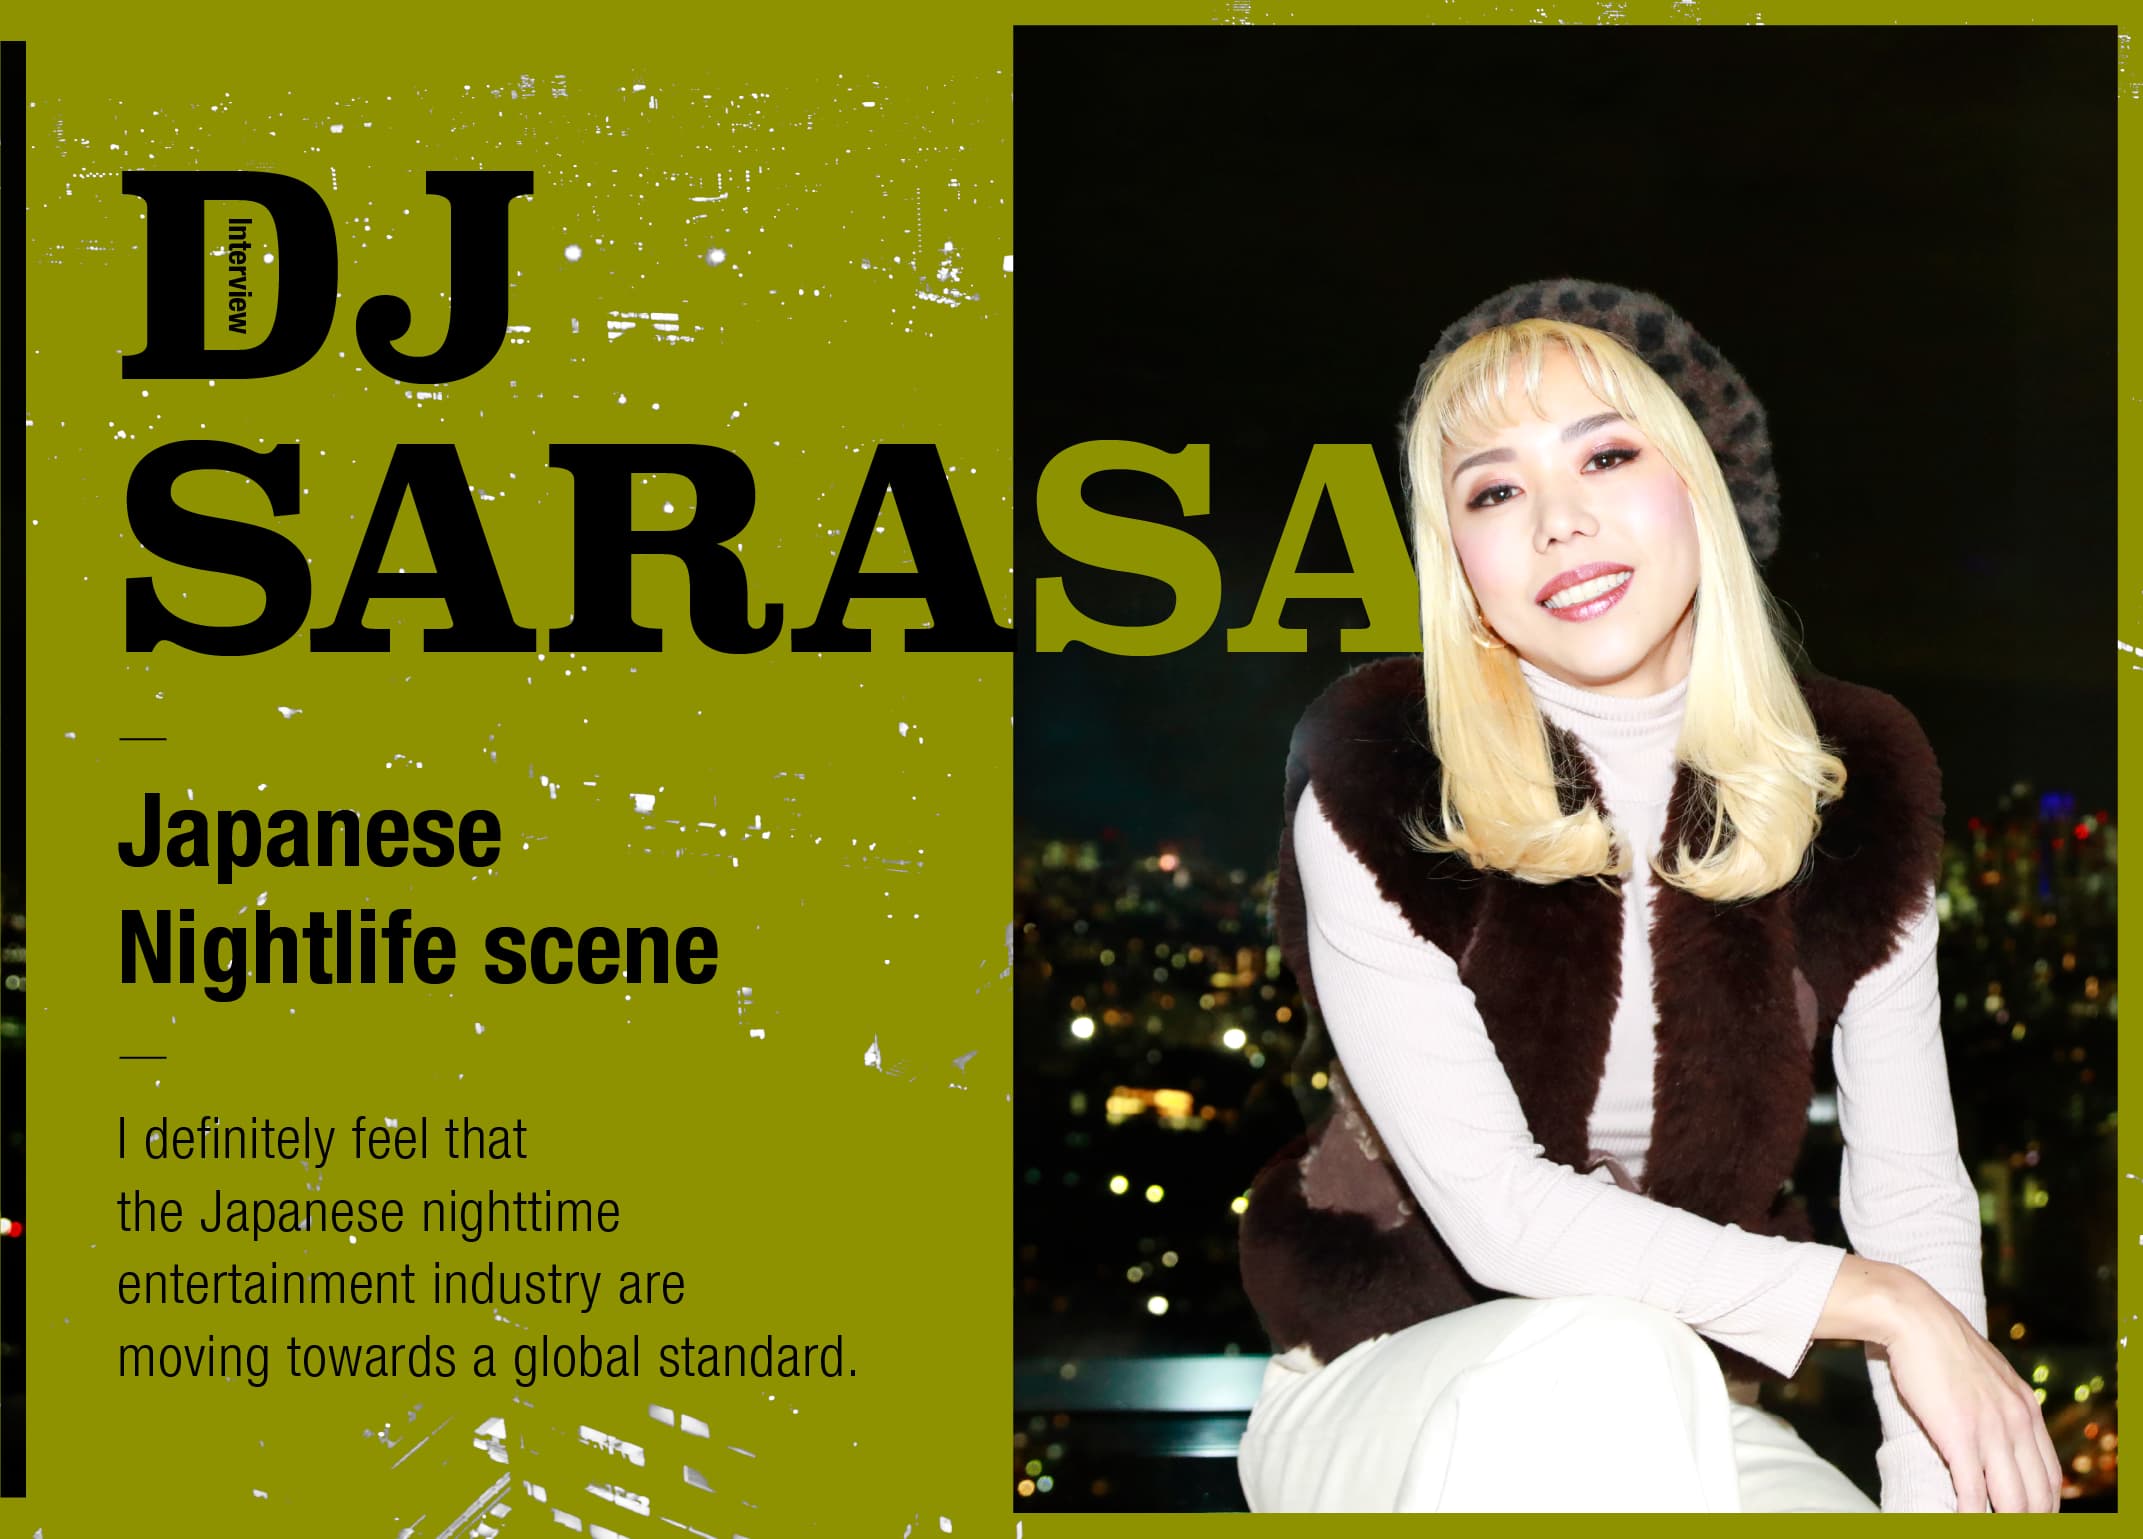 Japanese Nightlife scene featuring DJ SARASA